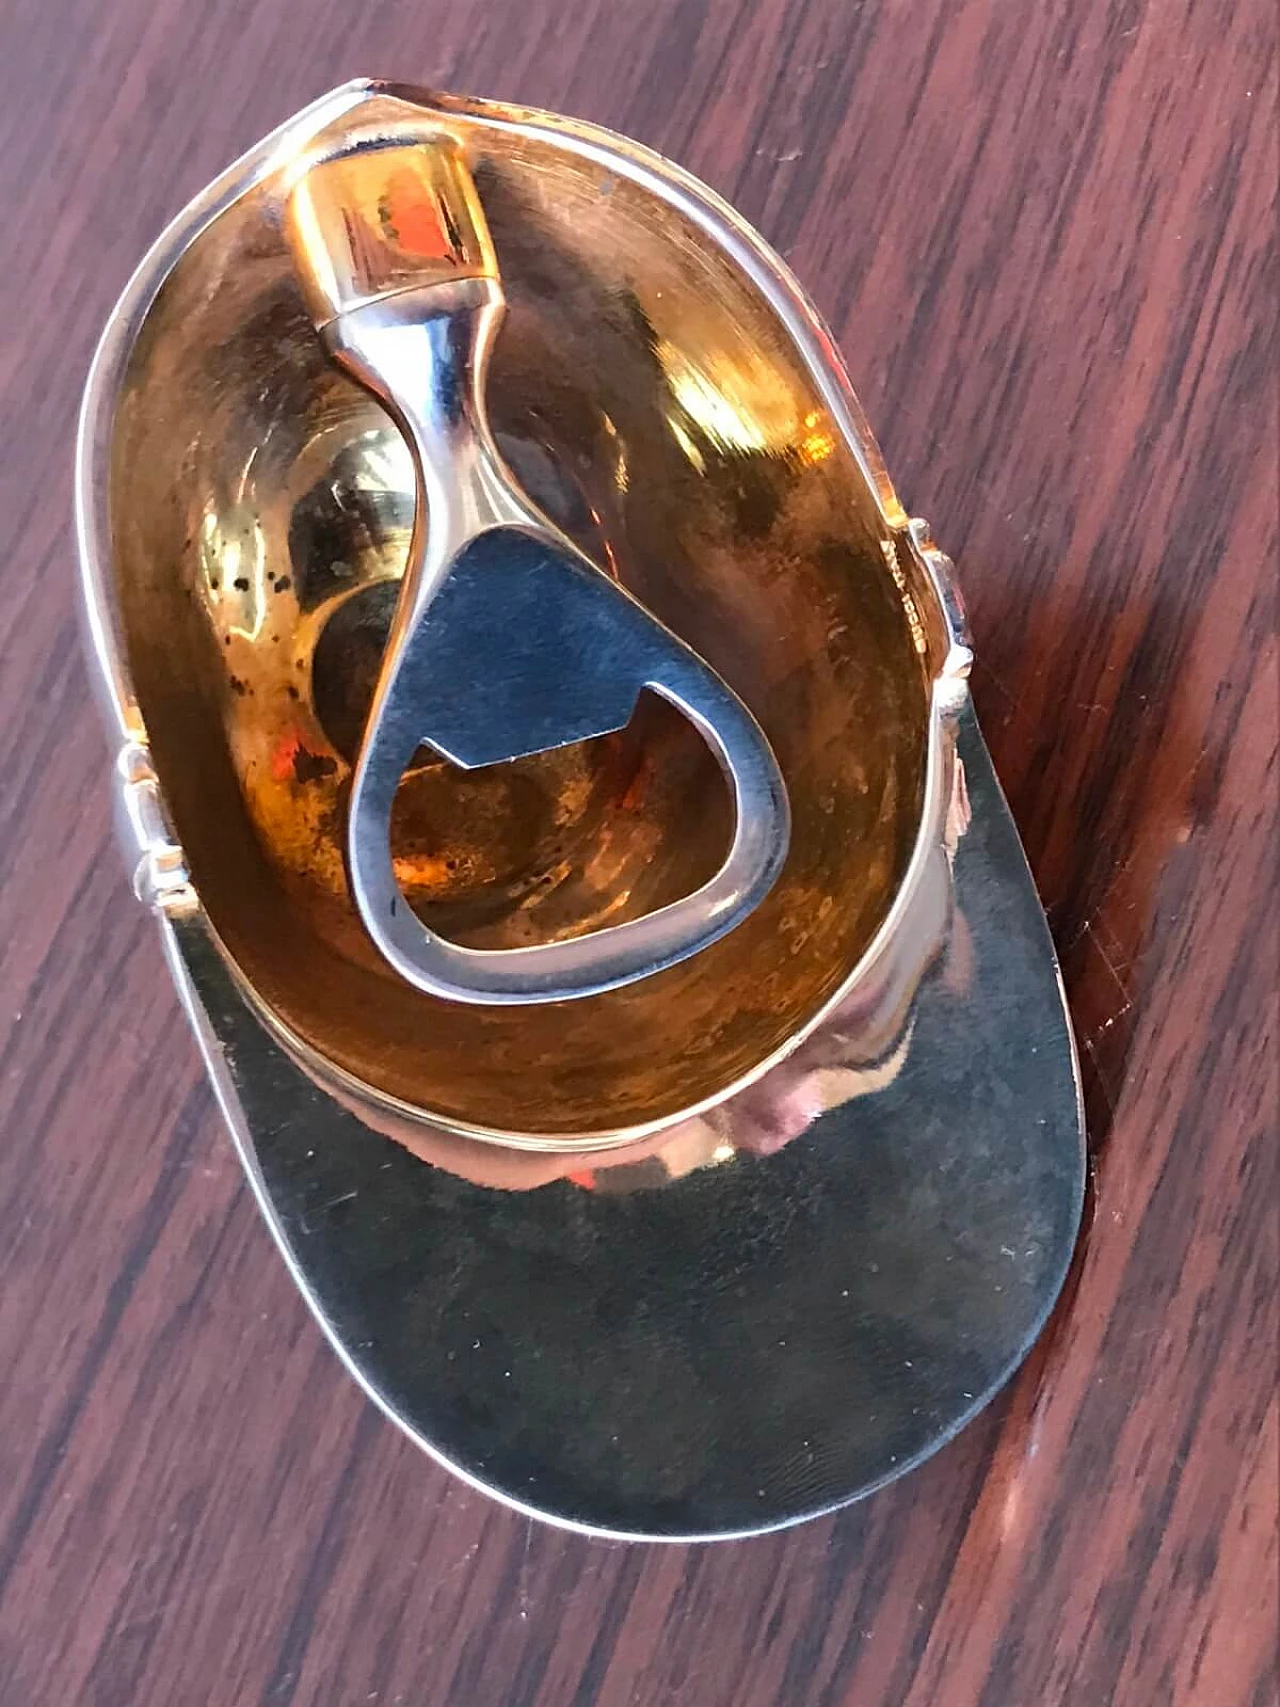 Vintage Gucci bottle opener, chrome-plated metal cap-shaped 4